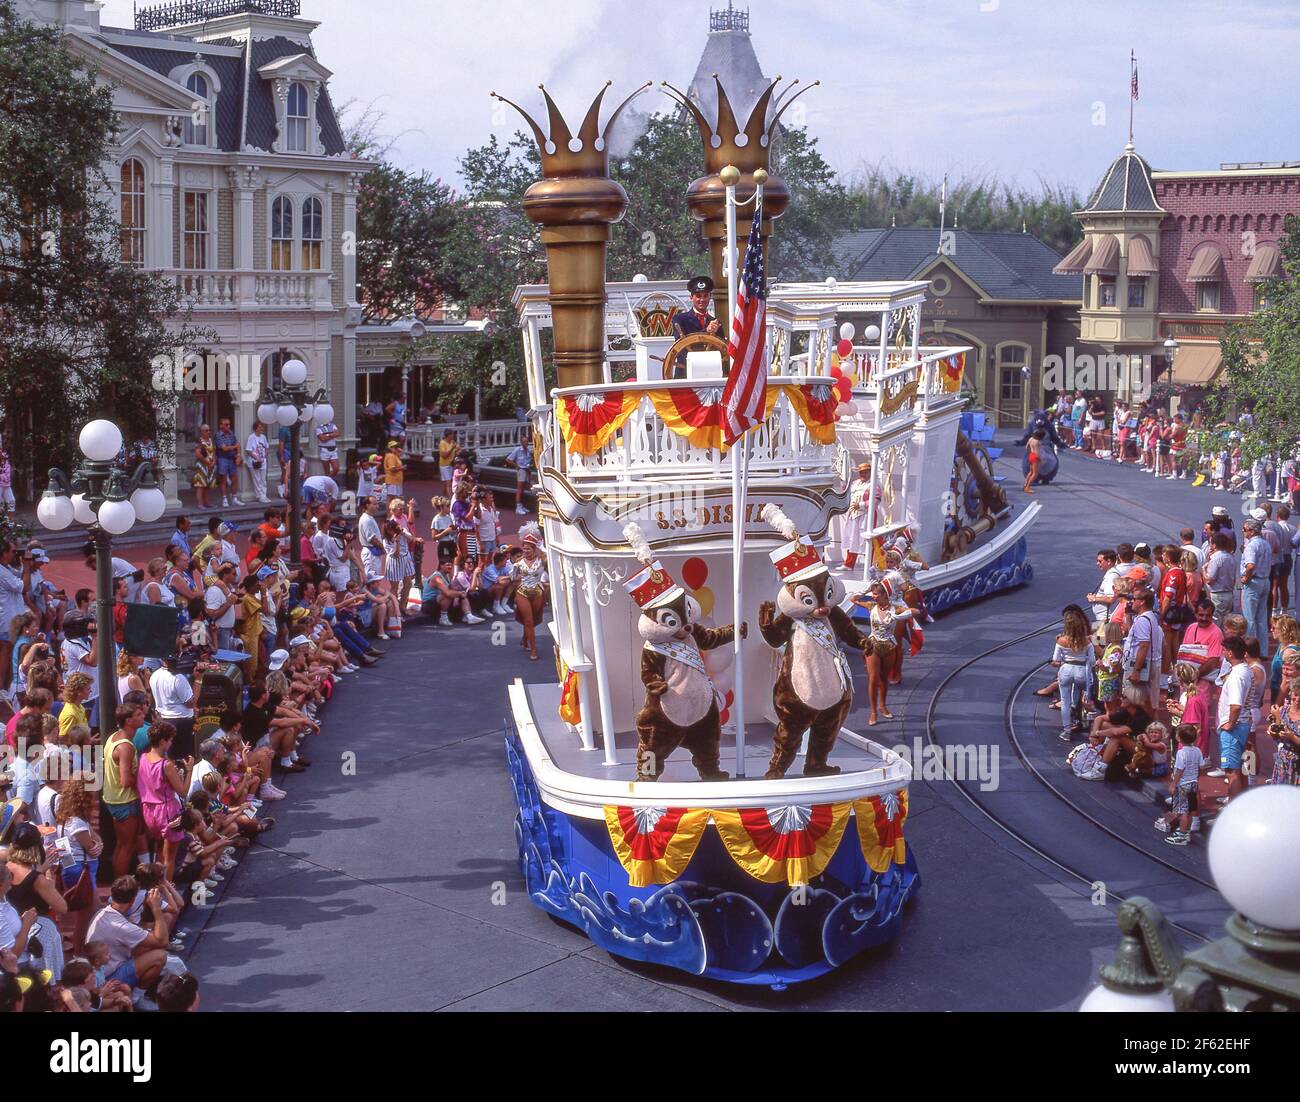 S.S.Disney float in parade at Walt Disney World, Orlando, Florida, United States of America Stock Photo